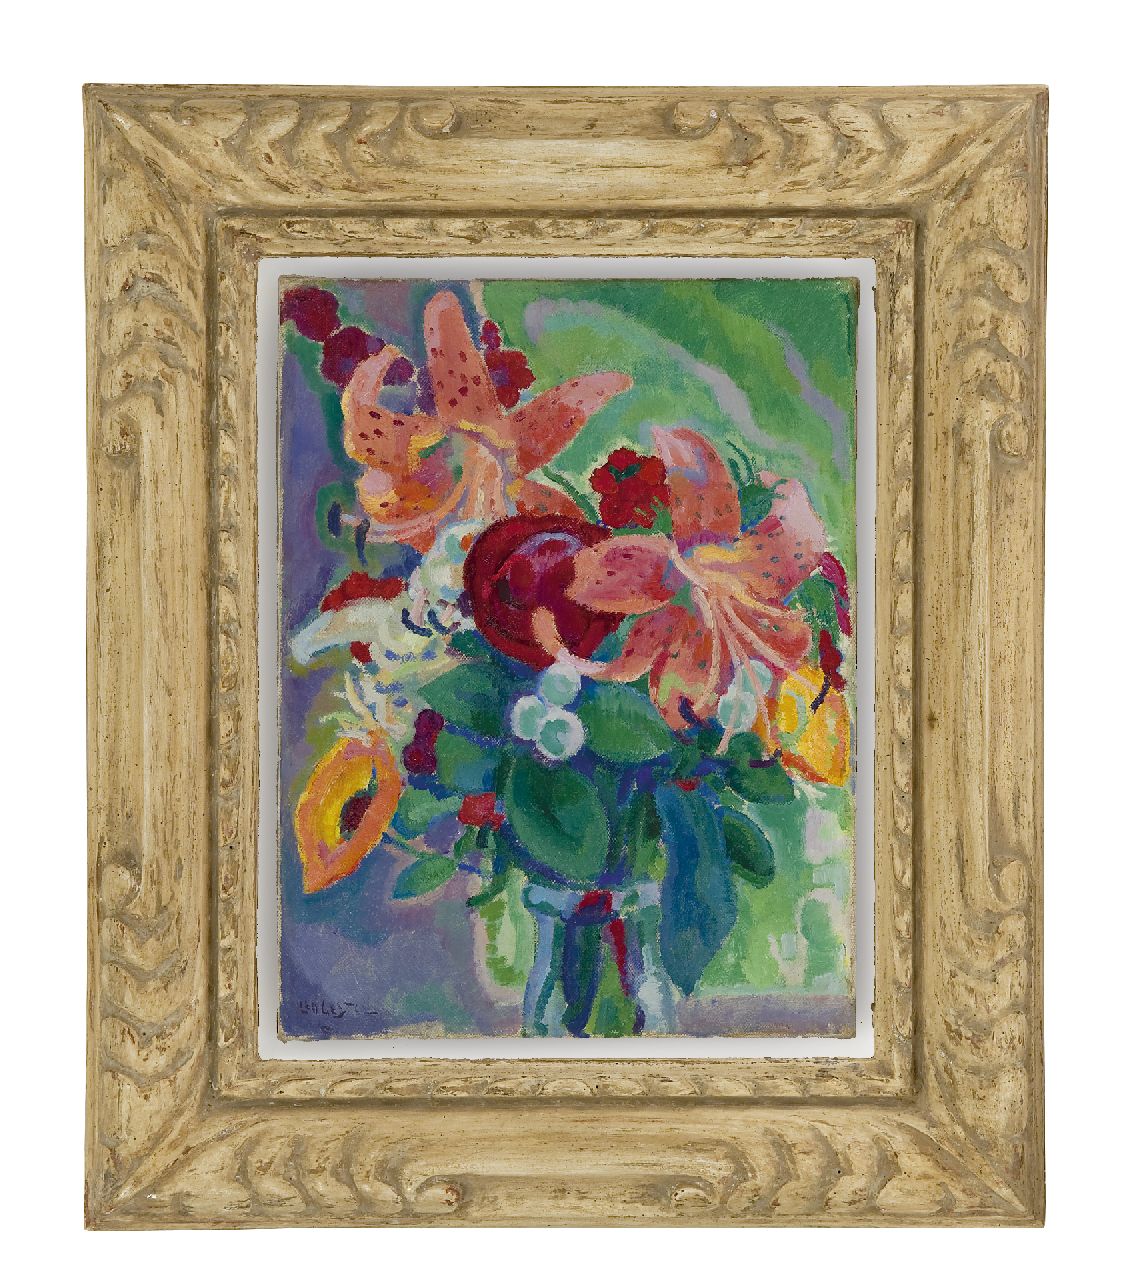 Gestel L.  | Leendert 'Leo' Gestel, Flower still life with tiger lilies, Öl auf Leinwand 33,3 x 25,3 cm, signed l.l. und painted ca. 1912-1913